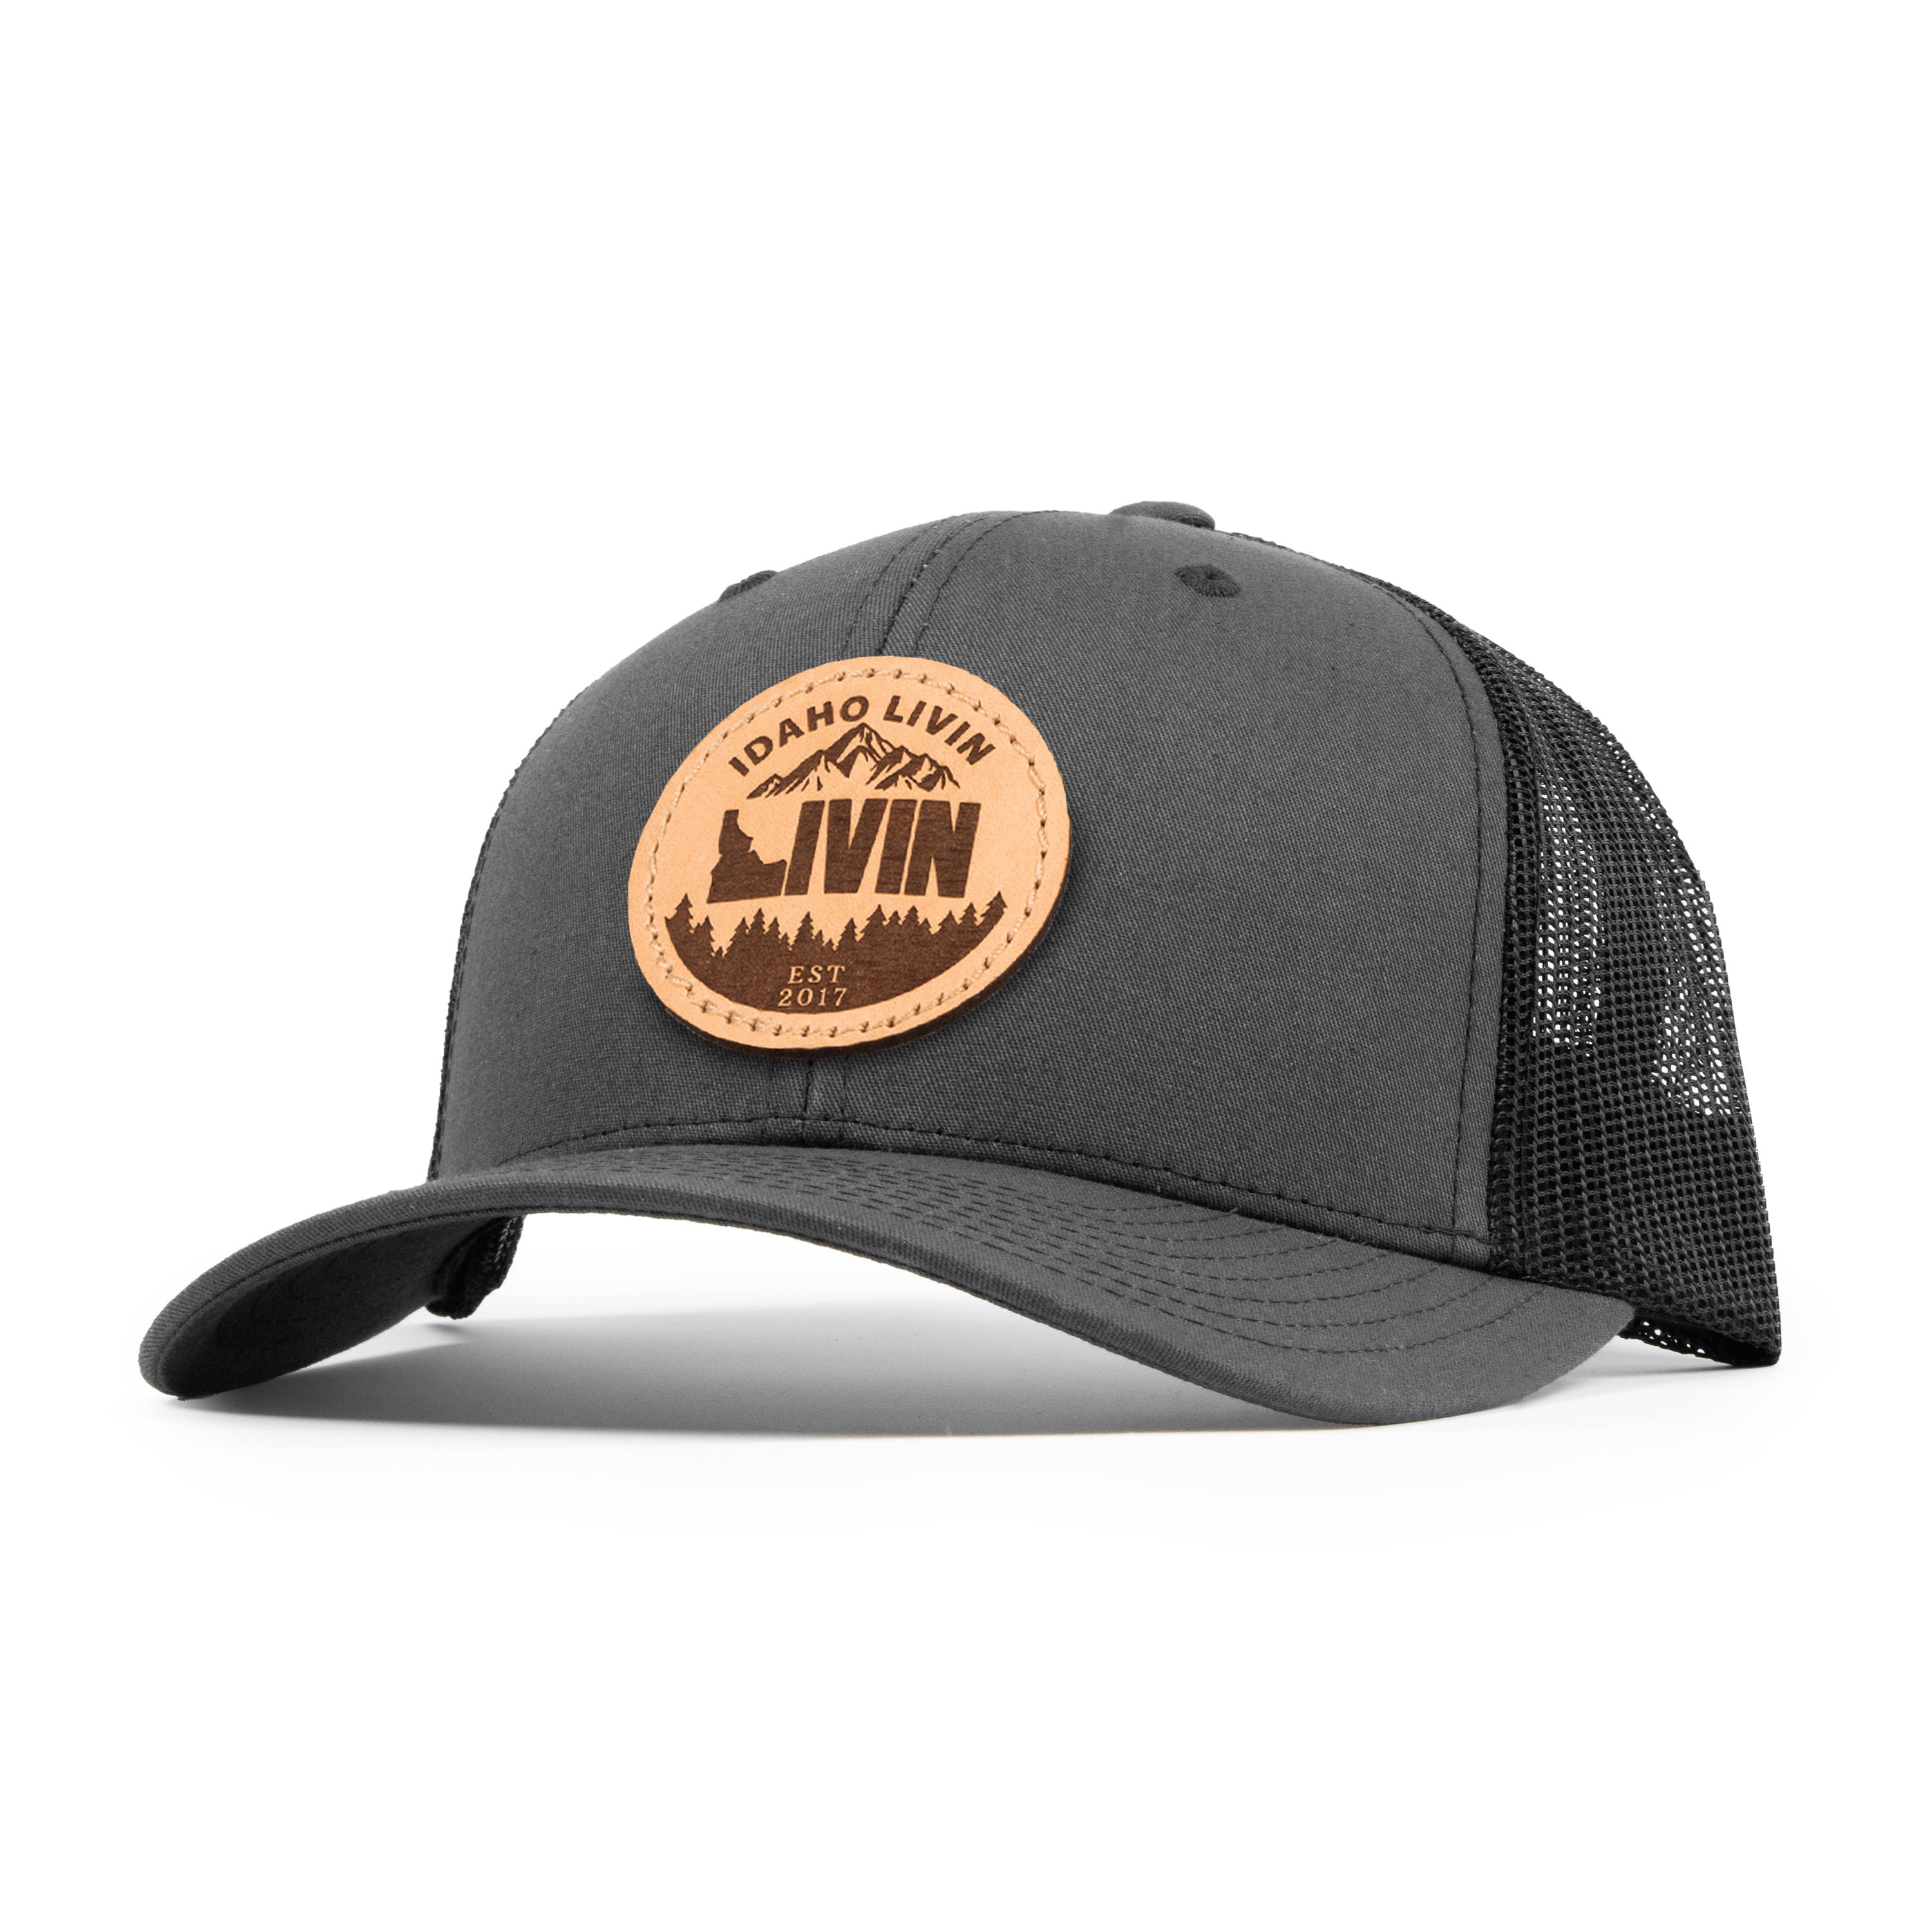 Idaho Livin: Unisex Circle Leather Patch Trucker Hat - Versatile Style